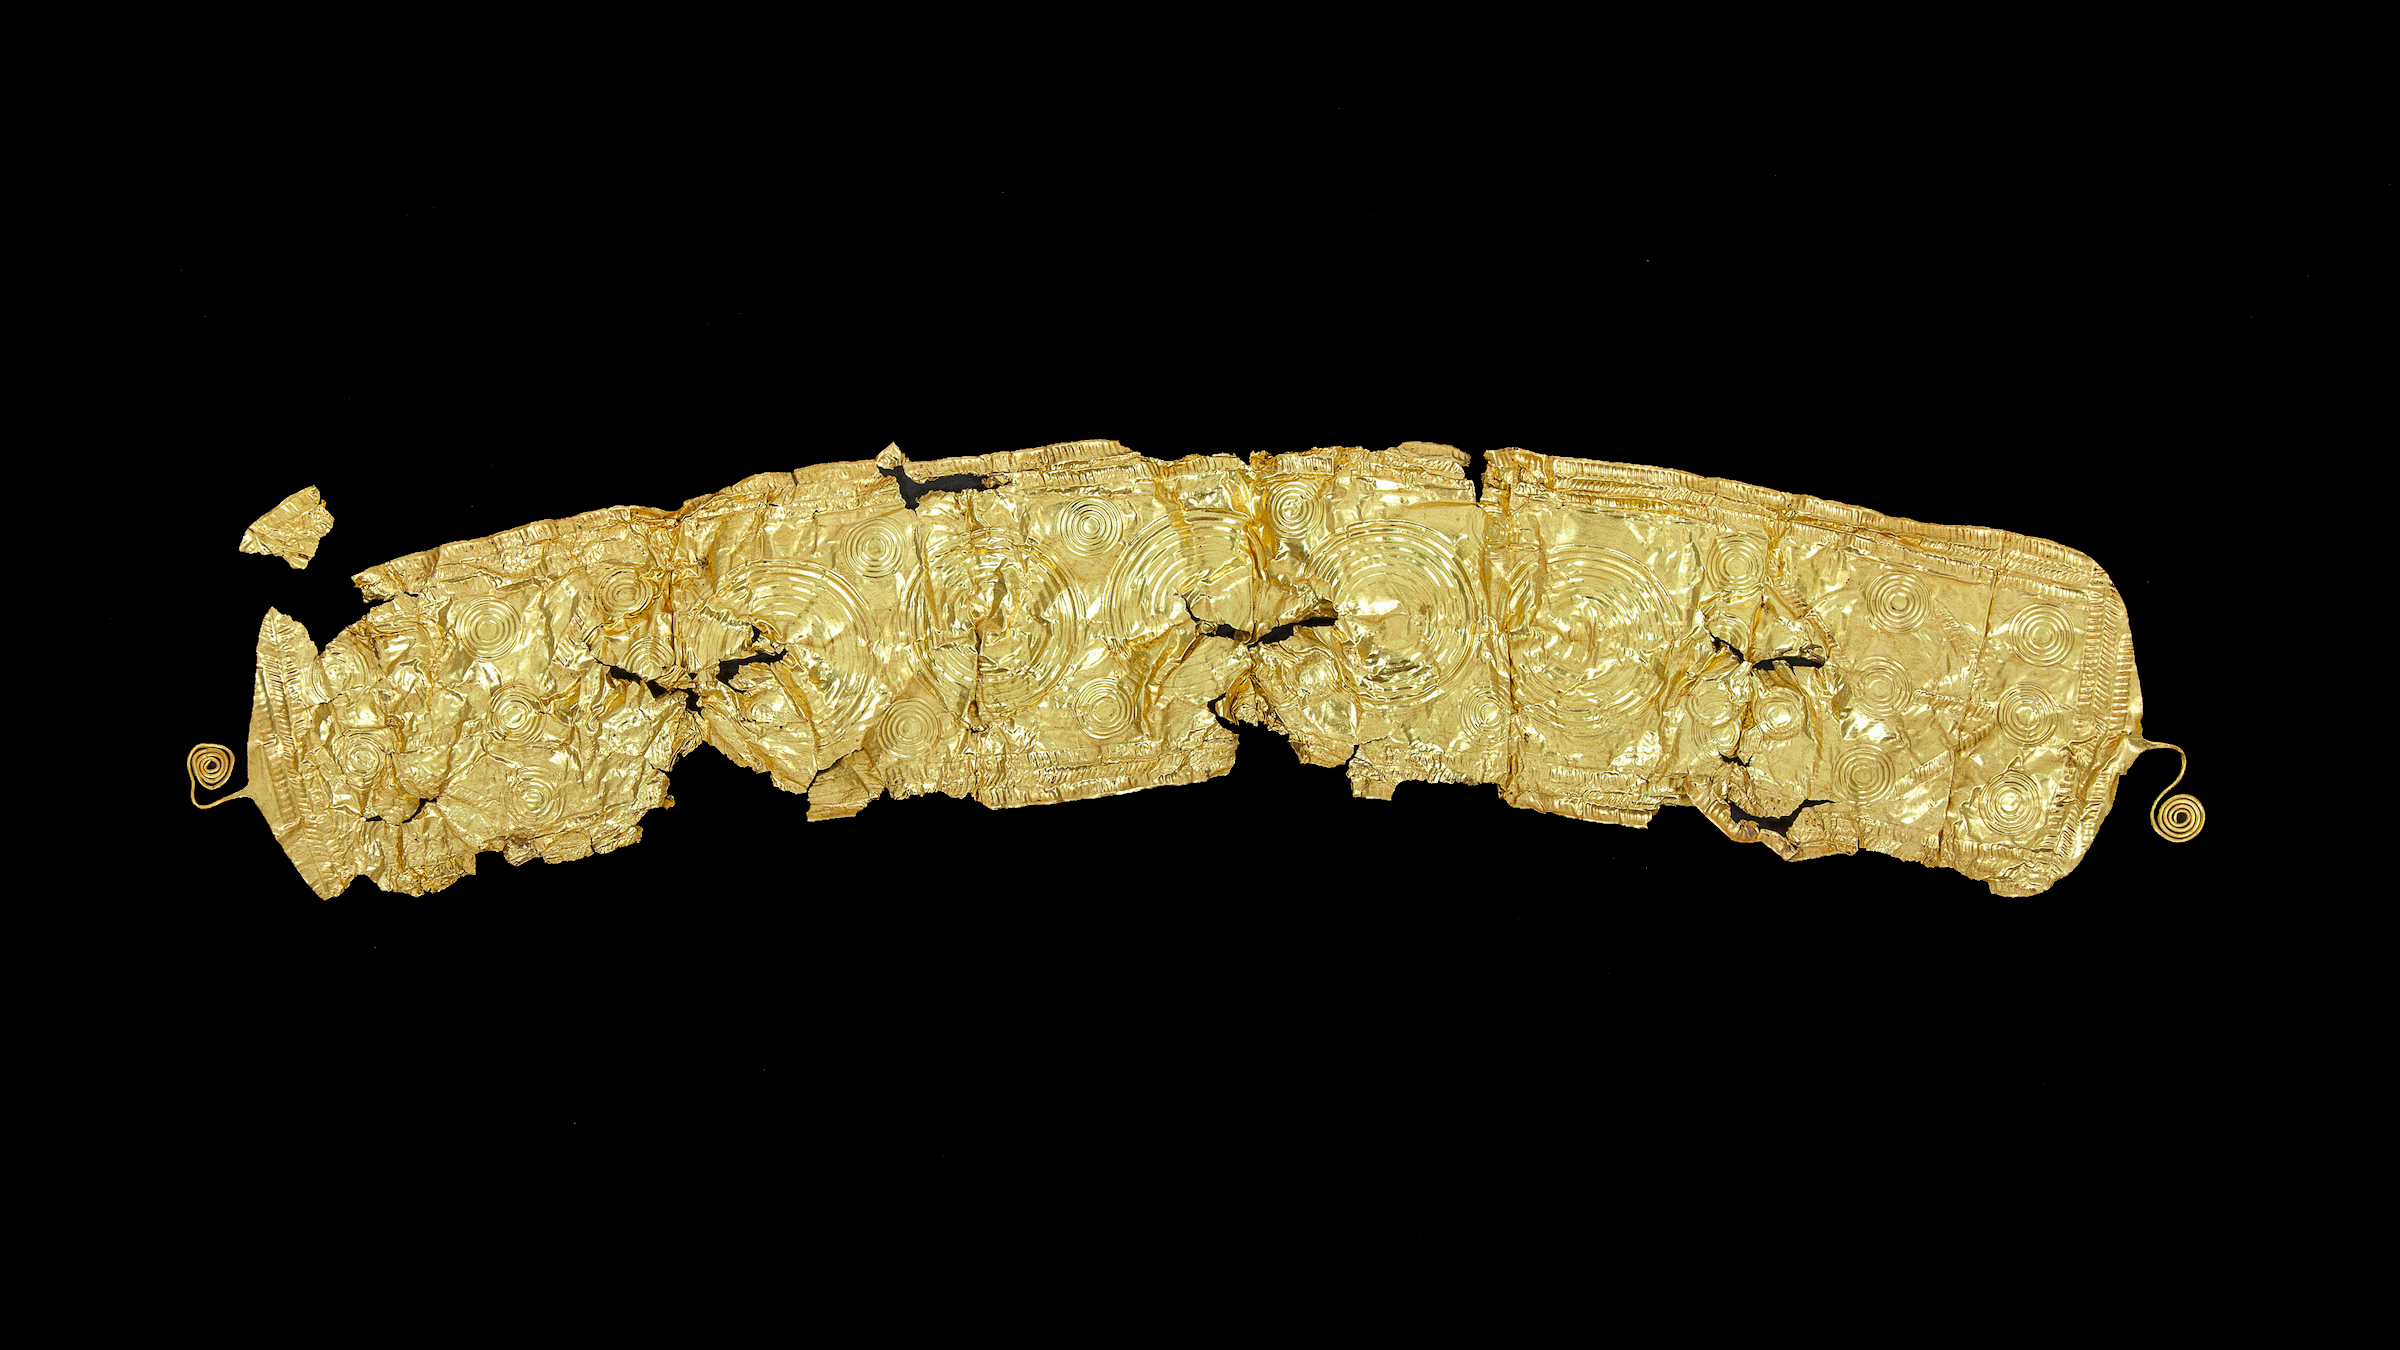 A Bronze Age gold belt found by a beet farmer in the Czech Republic.